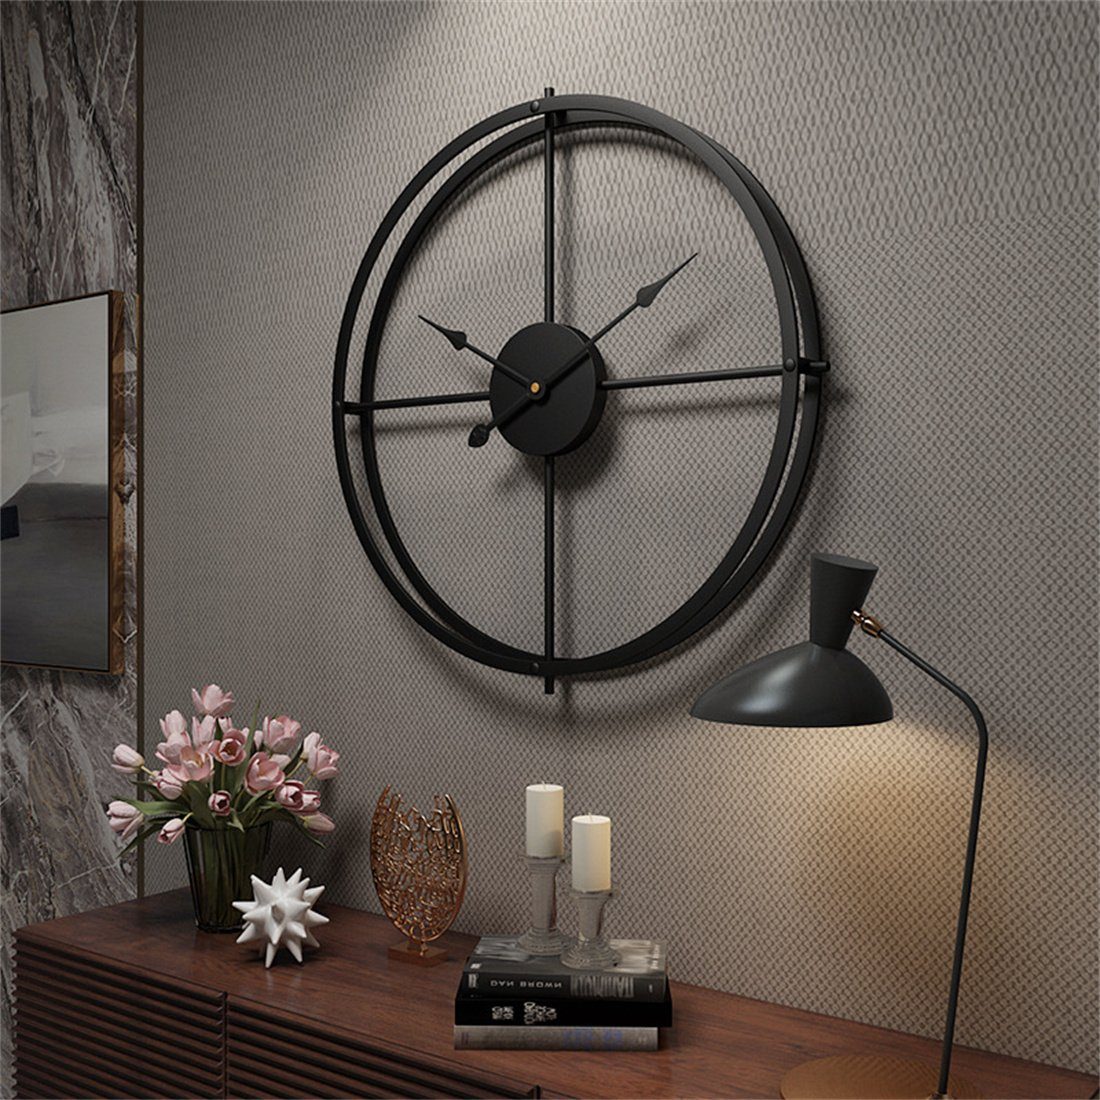 DÖRÖY Wanduhr 40cm Moderne Wanduhr aus Eisen, kreative stille Uhr,Wanduhr aus Metall Schwarz